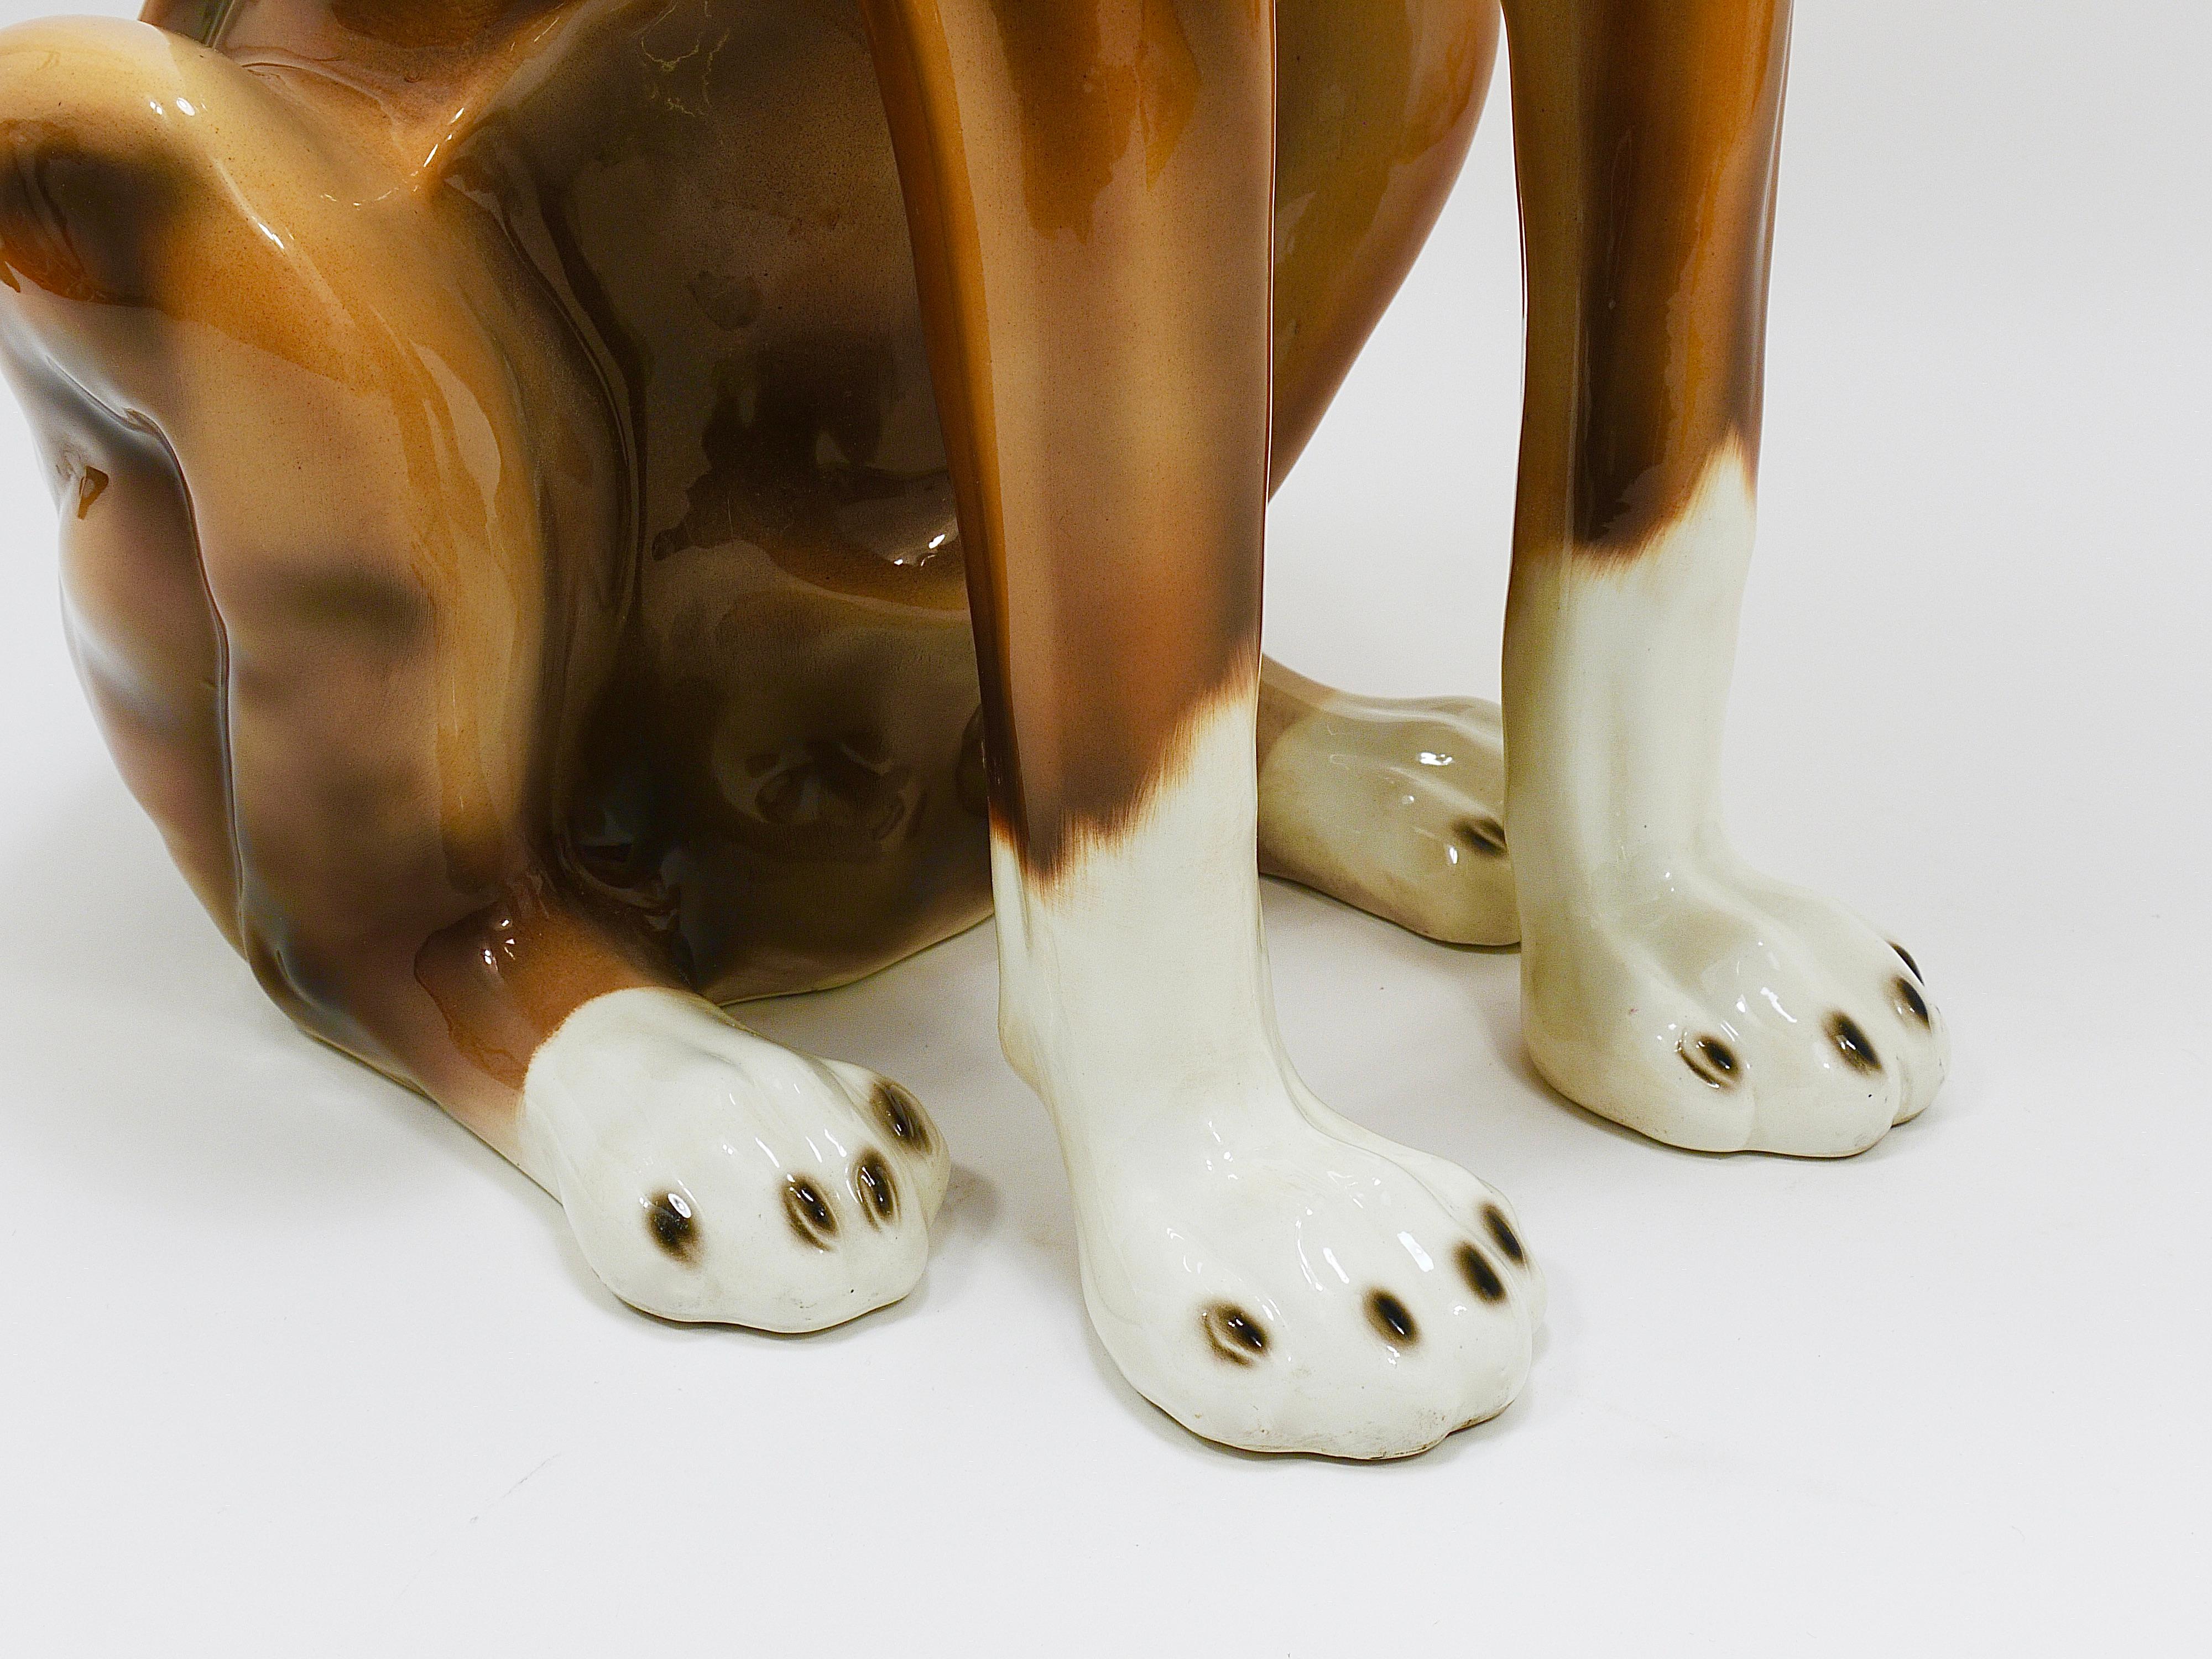 Boxer Dog Life-Size Majolica Statue Sculpture, Glazed Ceramic, Italy, 1970s For Sale 10